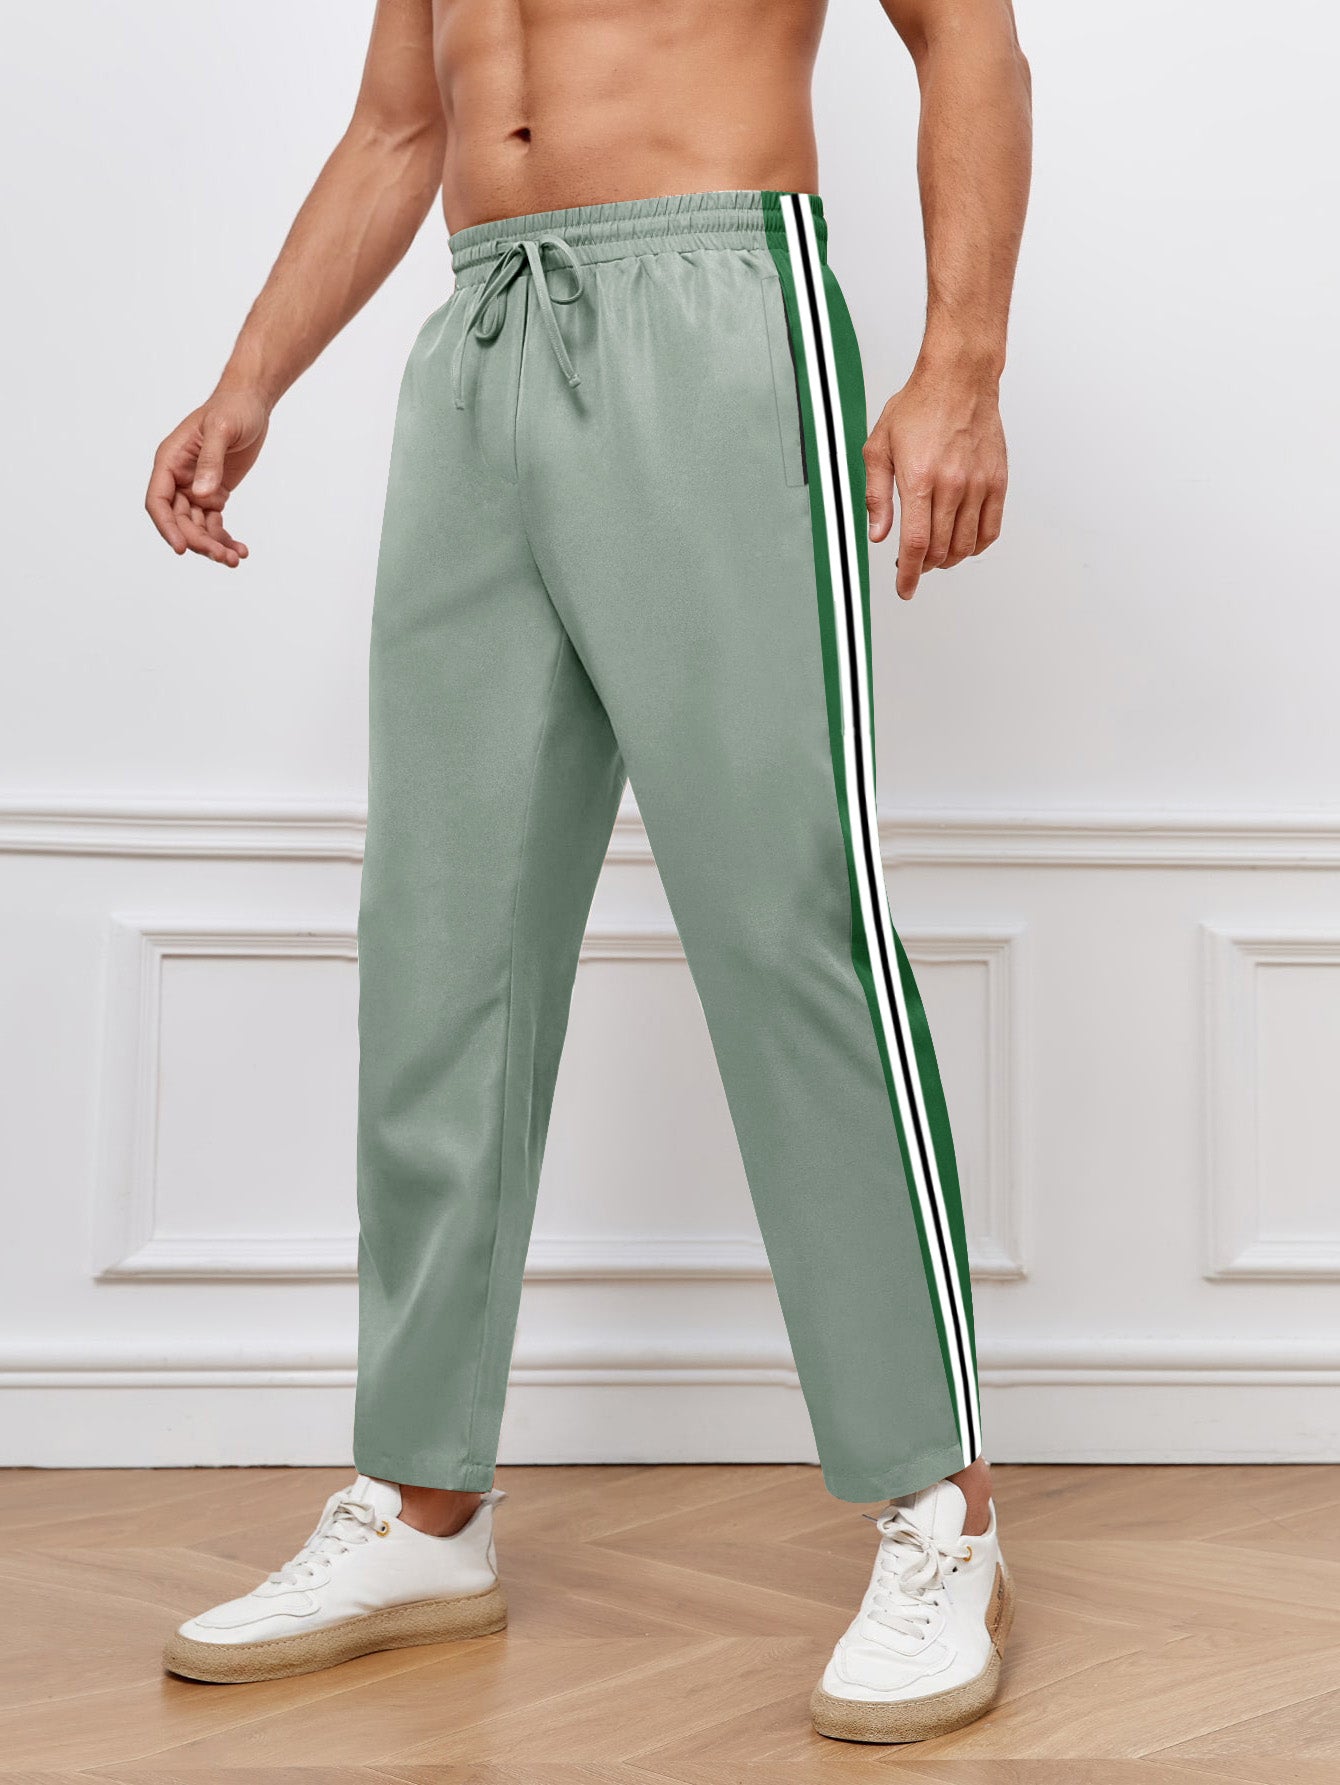 Louis Vicaci Slim Fit Summer Active Wear Trouser For Men-Graps with Whte & Green Stripe-SP1725